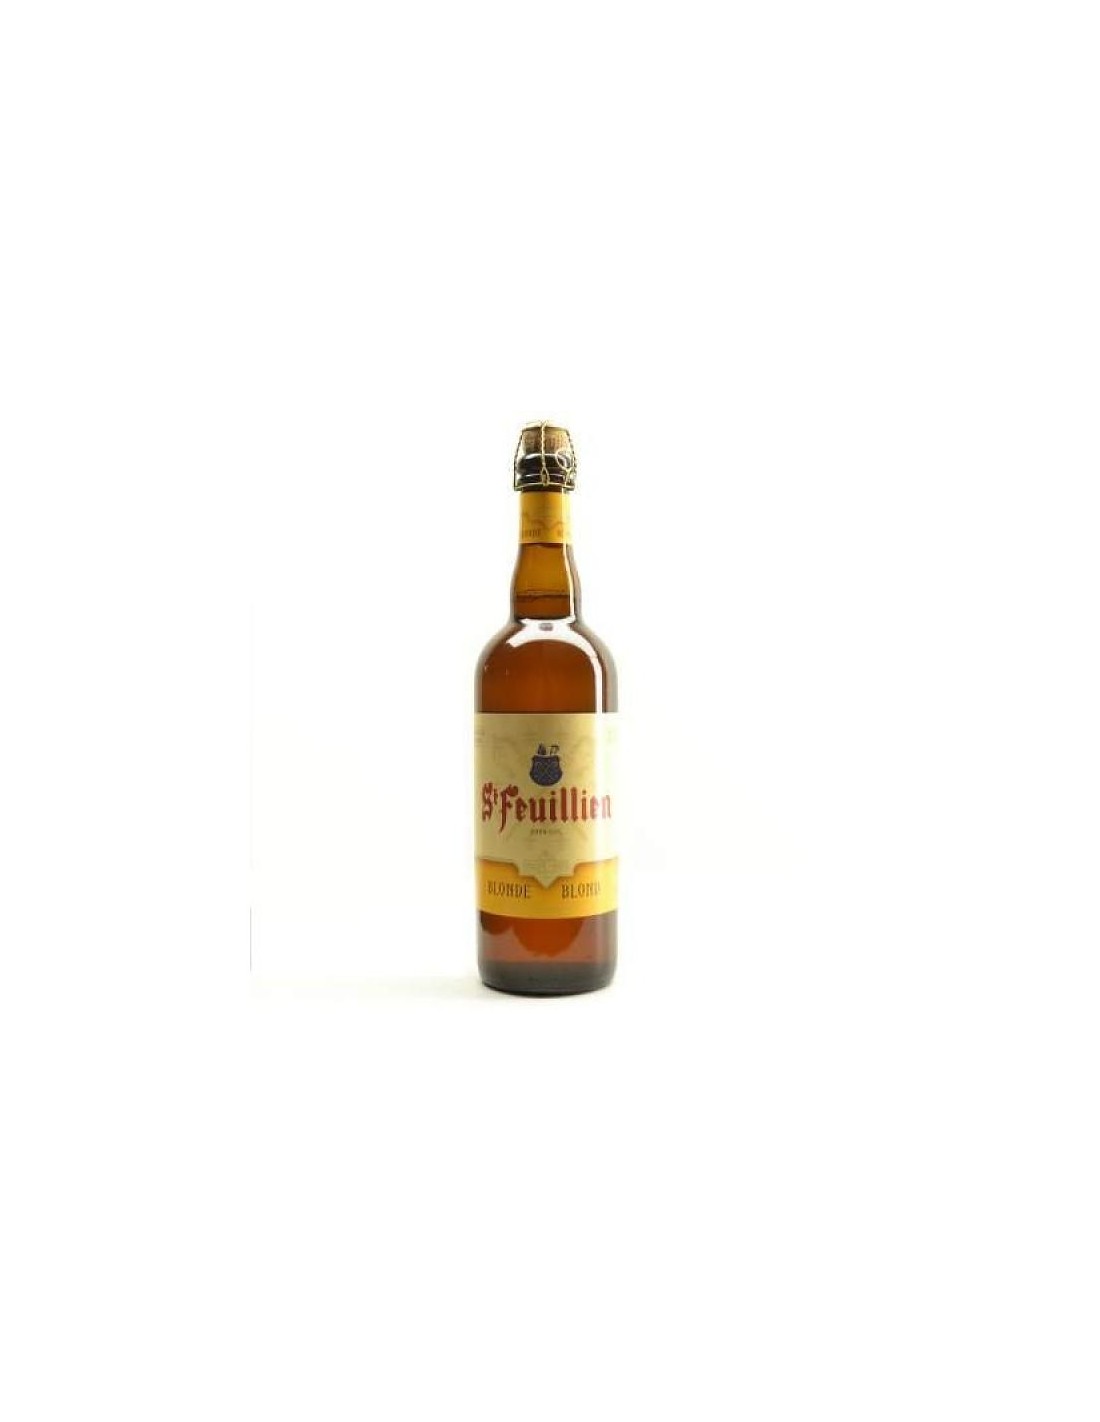 Bere blonda St Feuillien, 7.5% alc., 0.75L, Belgia alcooldiscount.ro